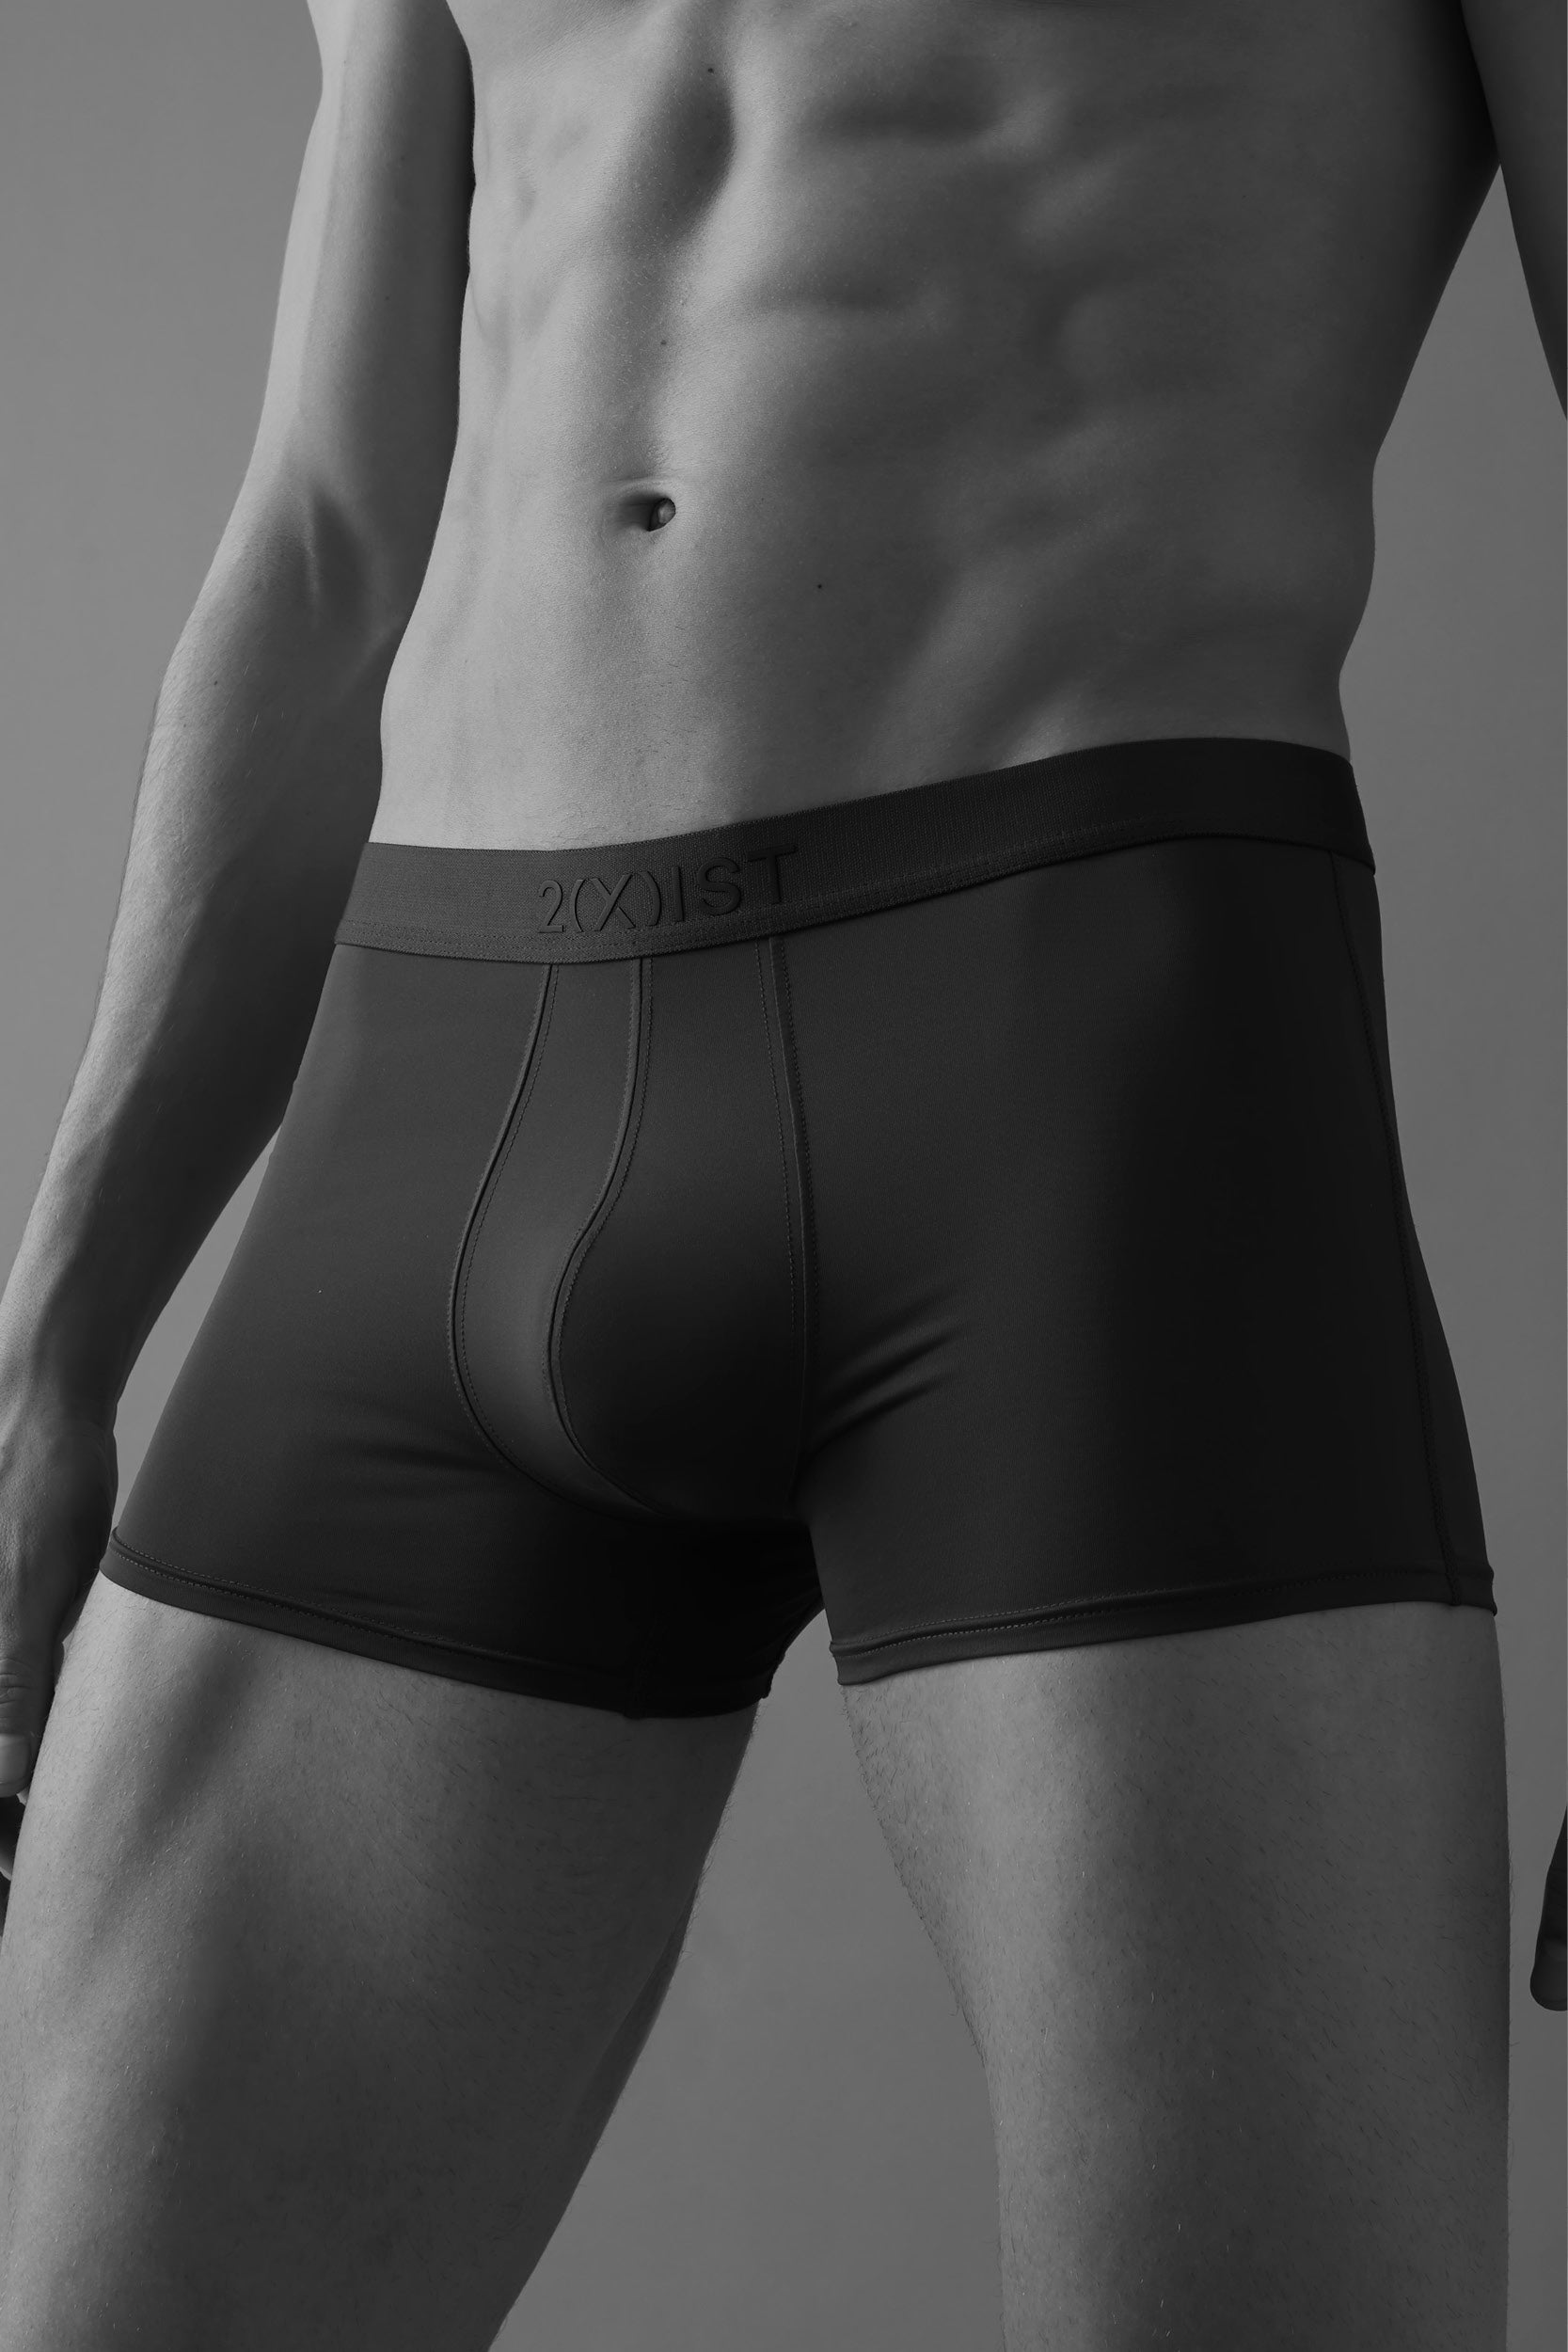 2(X)IST mens Shapewear Maximize Contour Pouch briefs underwear, Black,  Medium US at  Men's Clothing store: Briefs Underwear